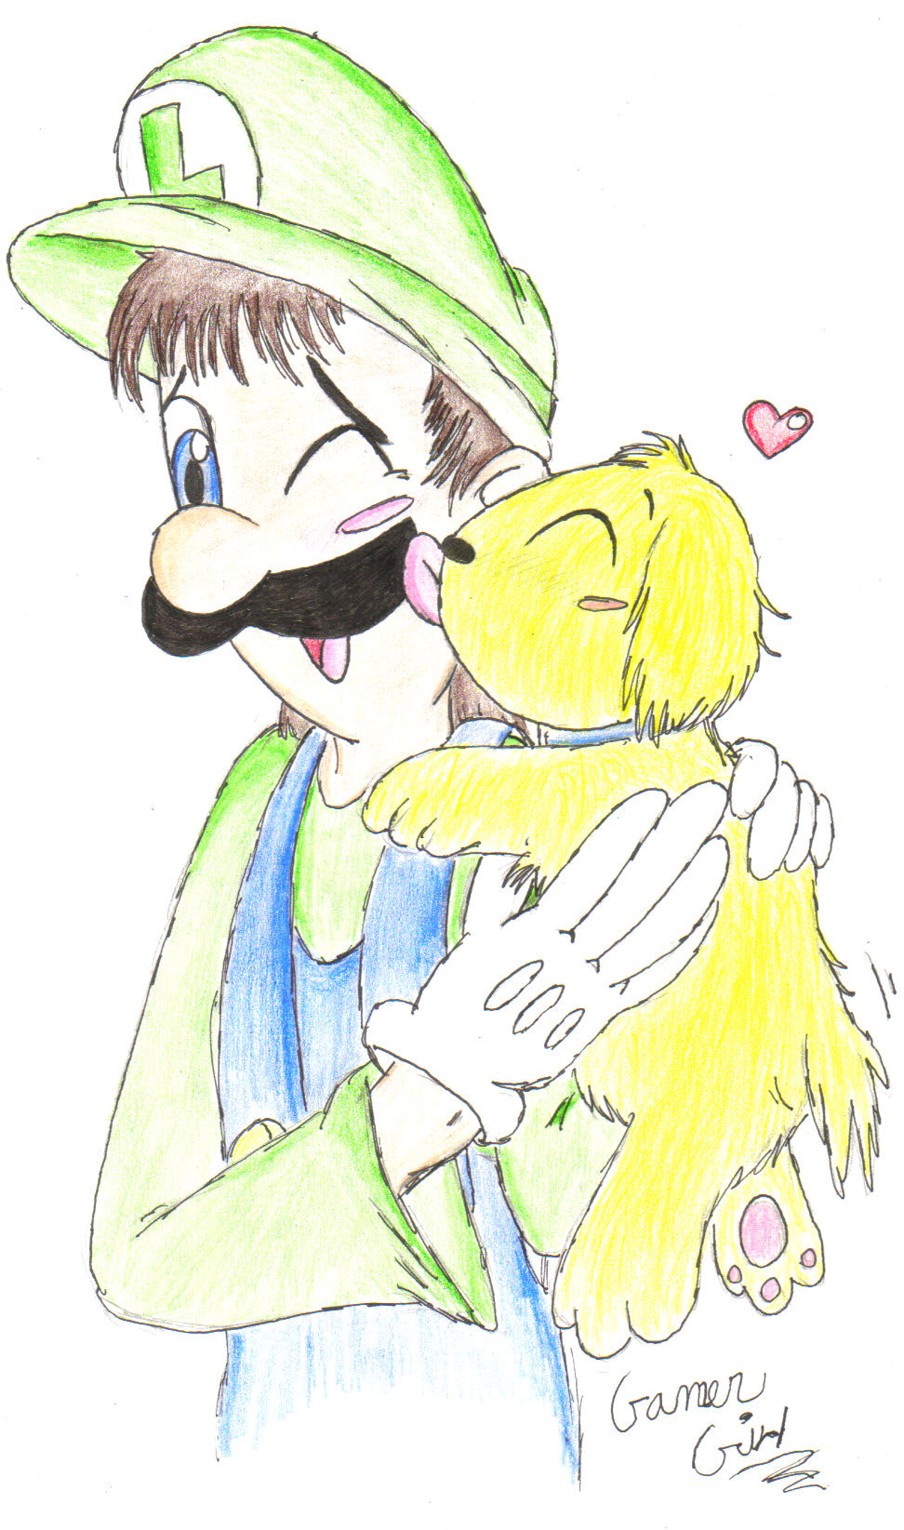 Luigi and poochy again by Gamer_girl